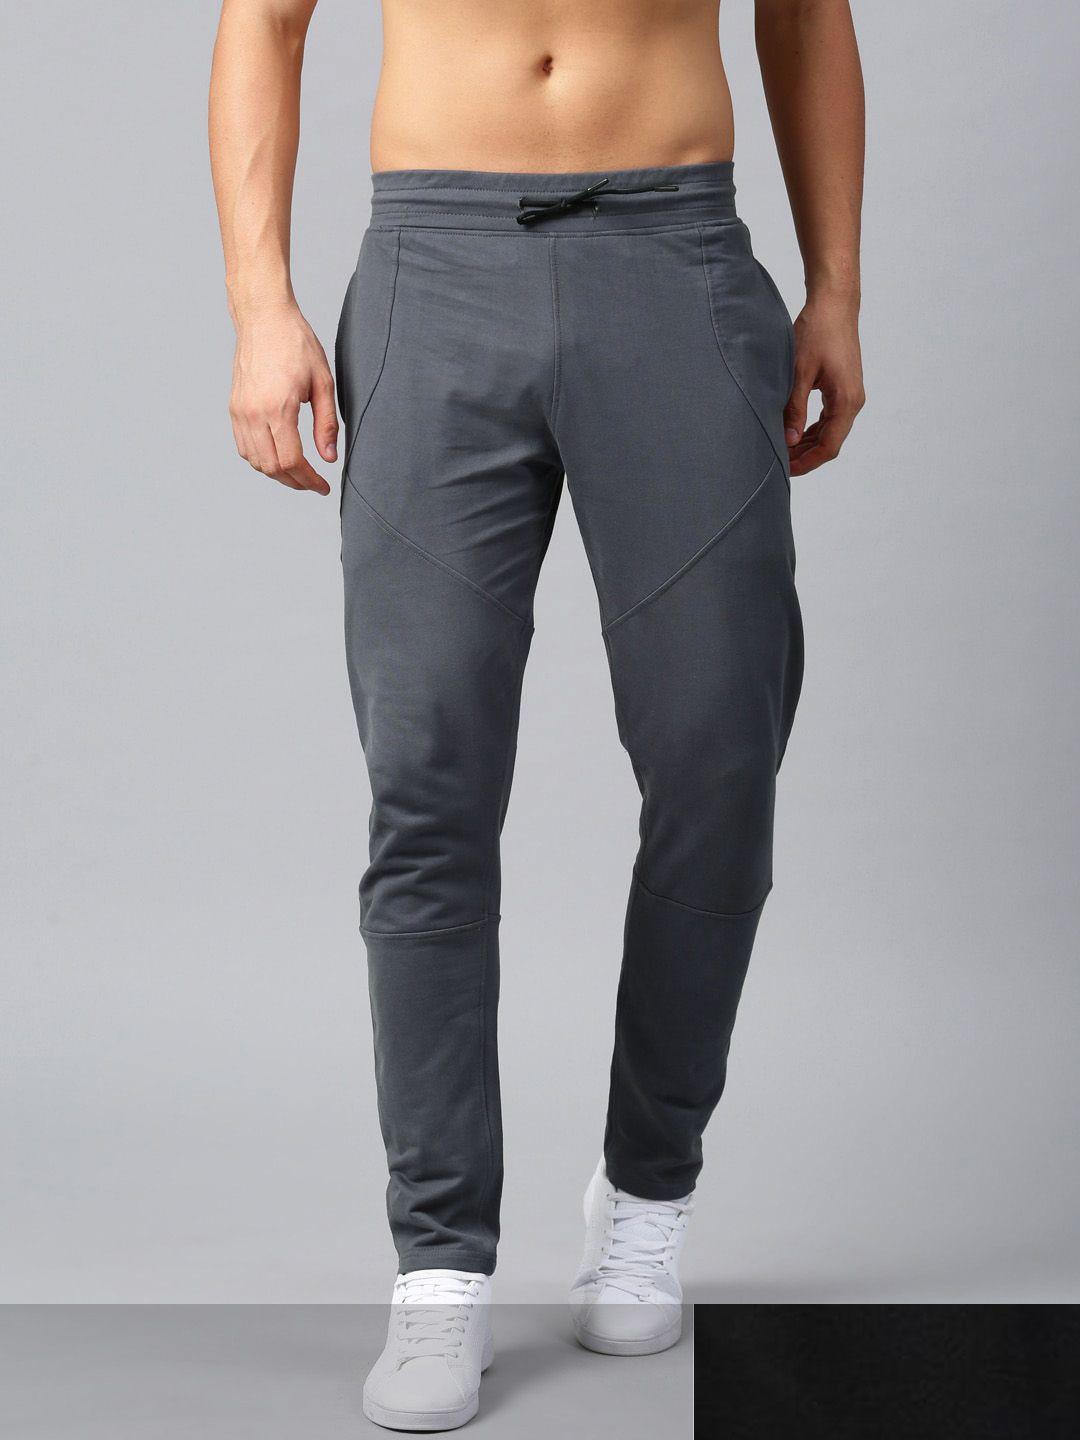 hrx by hrithik roshan  men pack of 2 grey & black solid active track pants